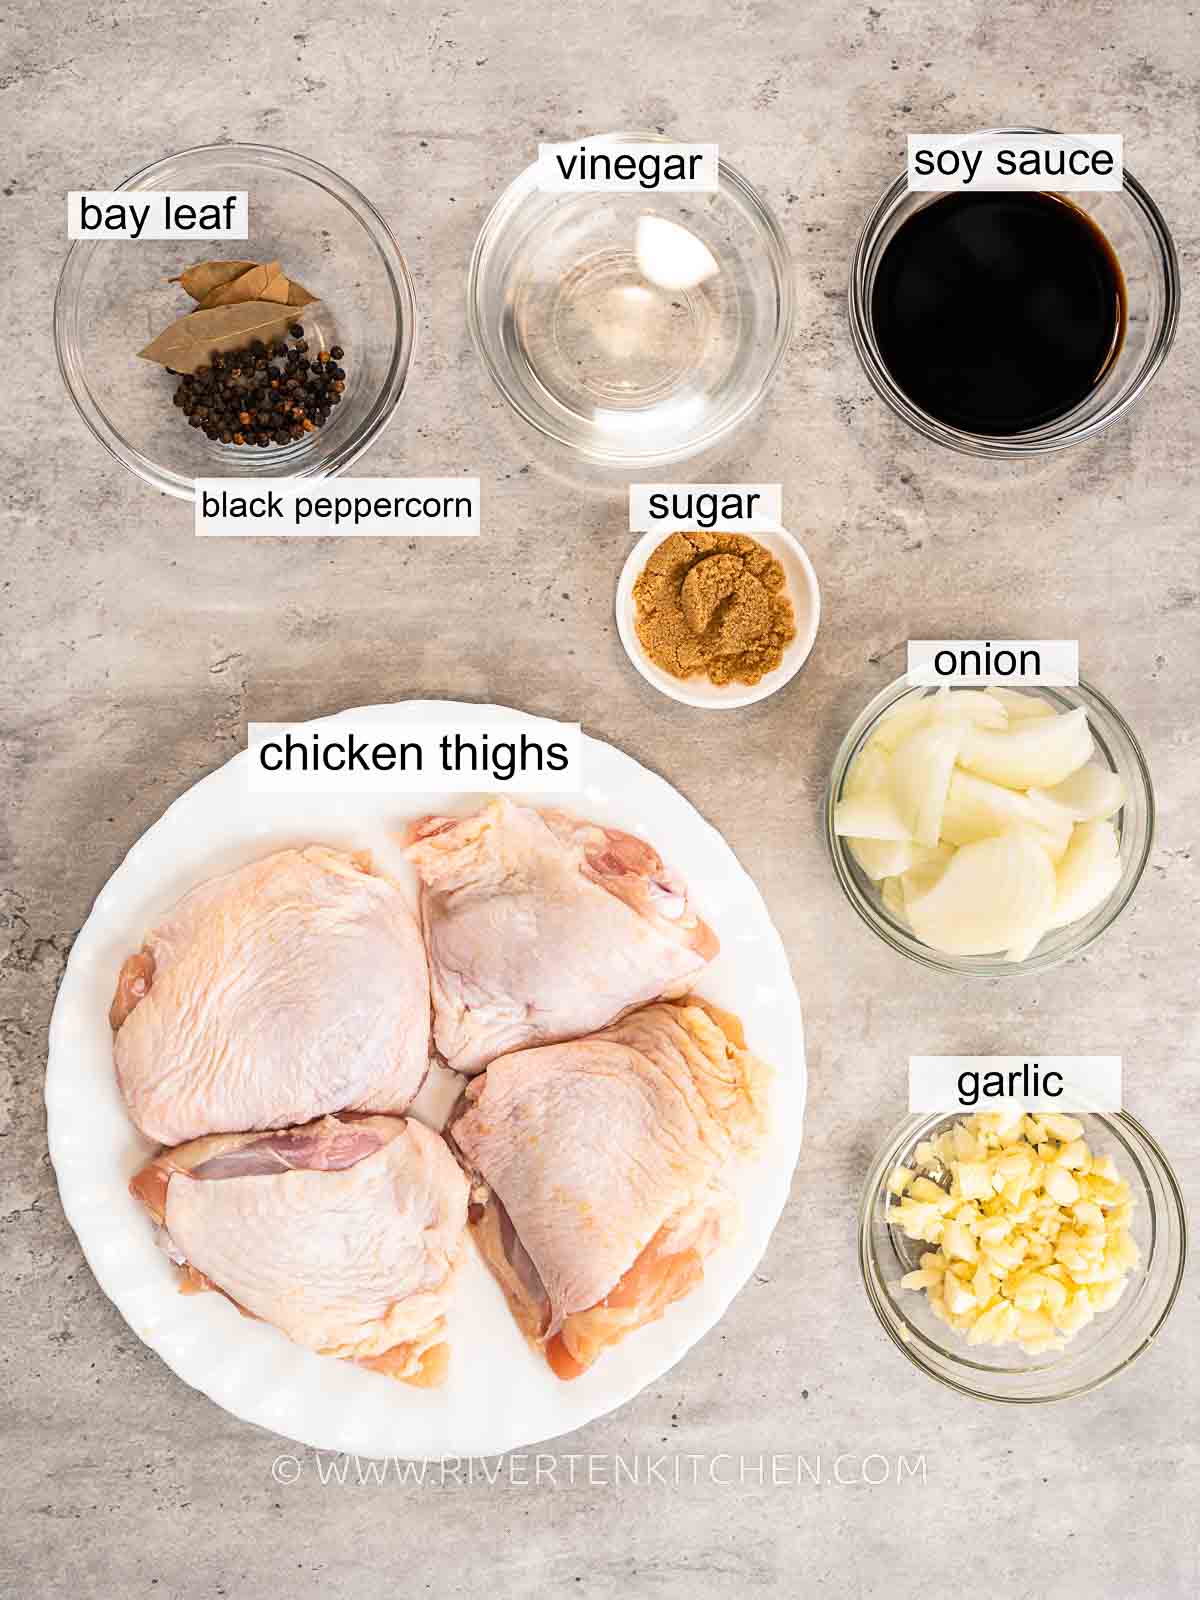 Chicken thighs, soy sauce, vinegar, onion, garlic, black peppercorn